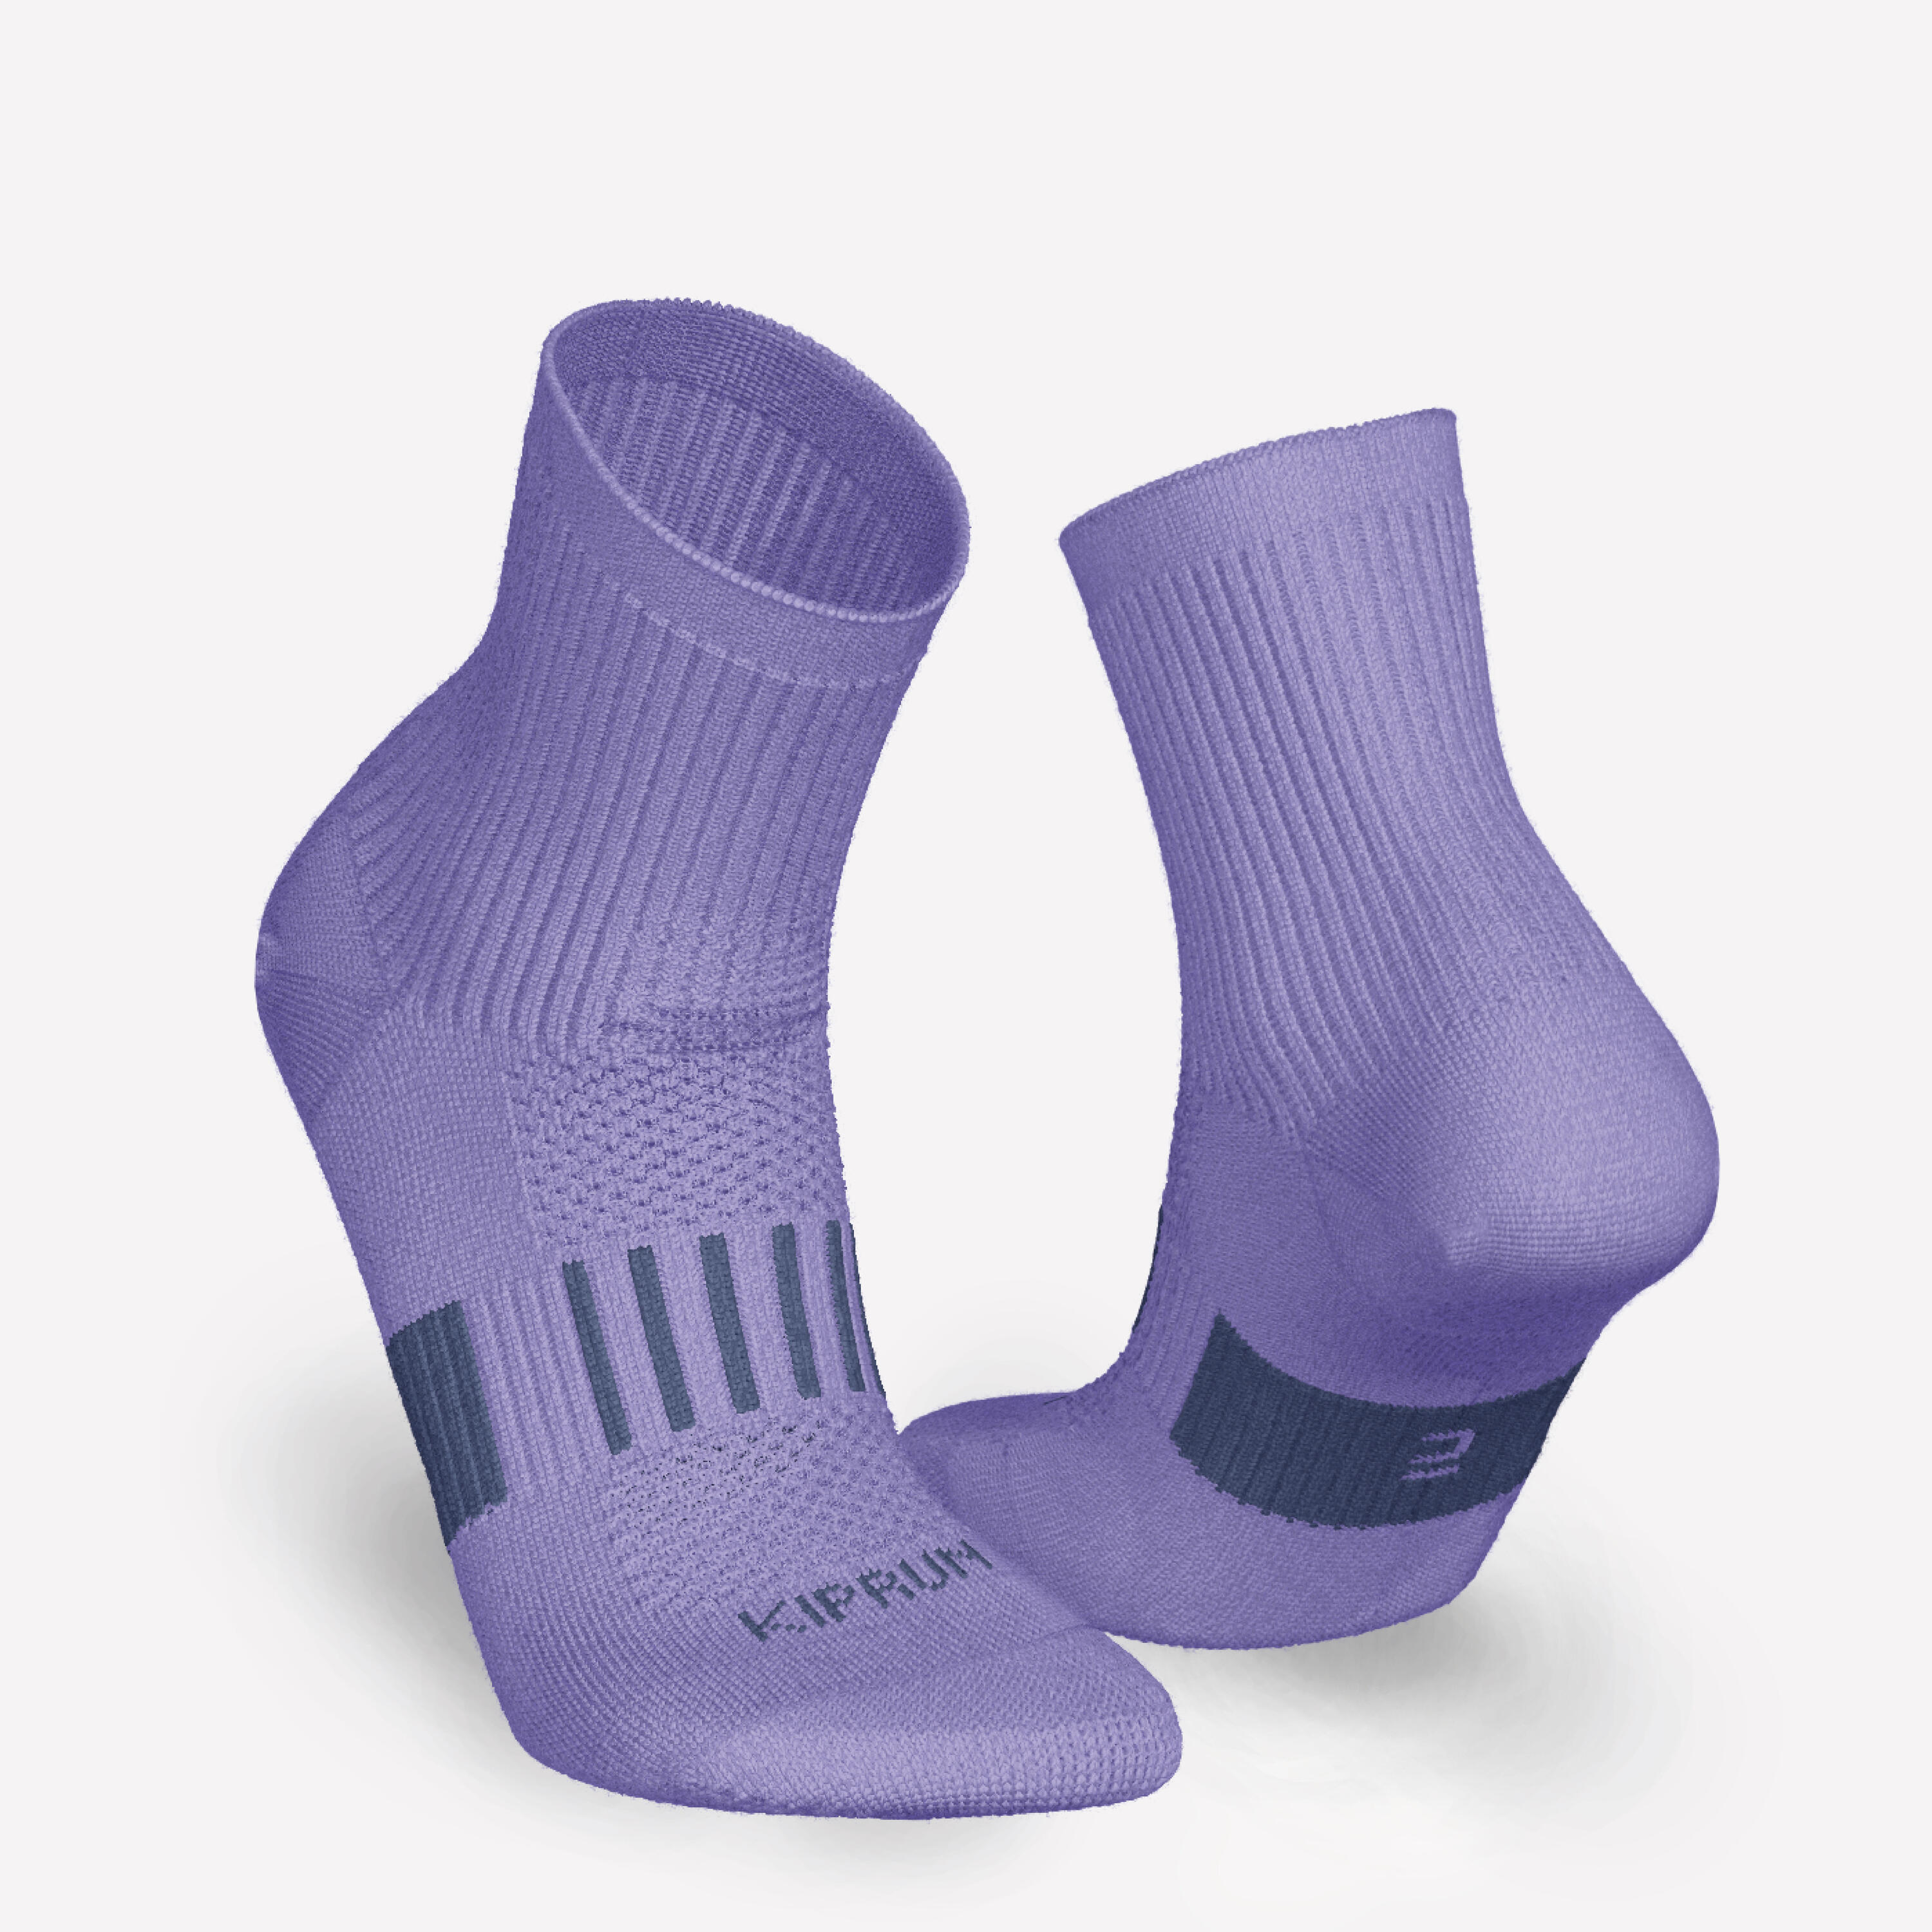 KIPRUN 500 mid kids' comfort running socks 2-pack - striped and plain purple 2/11